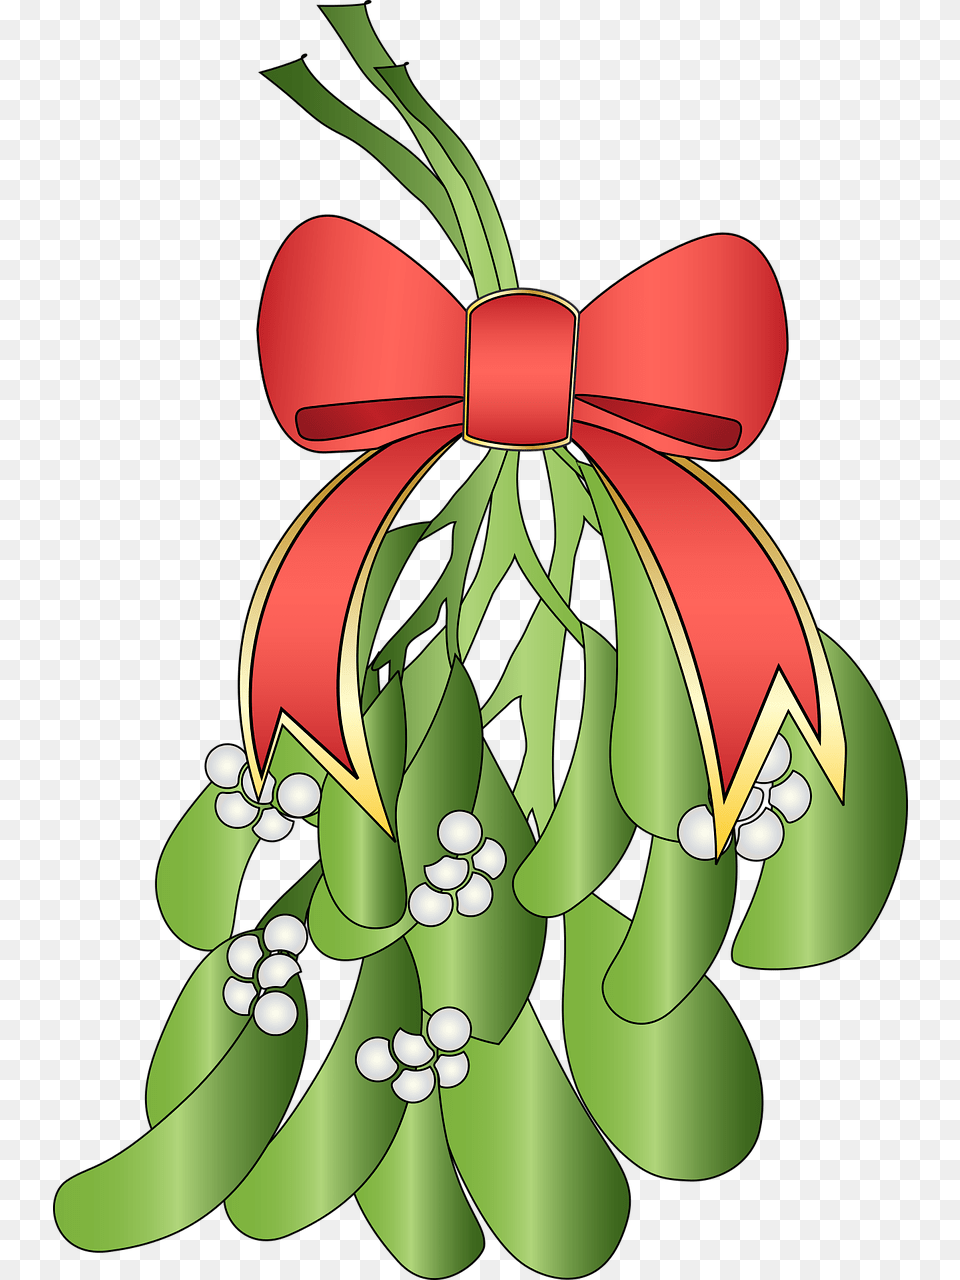 Gift Christmas Light Bulb Turkey Ornament Poinsettia Illustration, Art, Floral Design, Graphics, Pattern Png